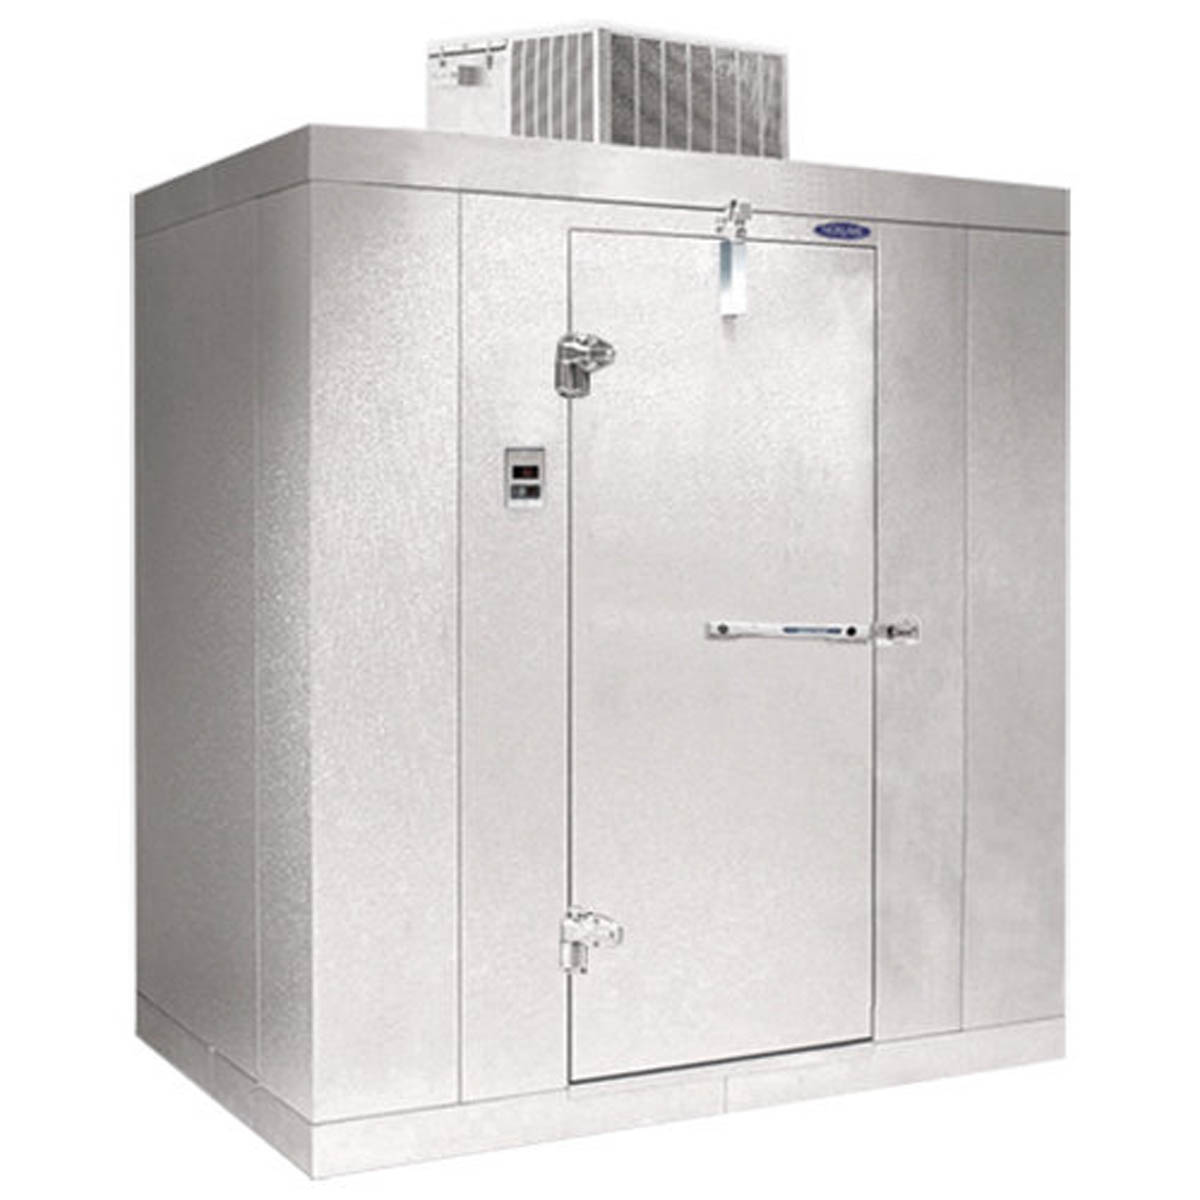 Nor-Lake KODF87612-C 6' X 12' Kold Locker™ Outdoor Walk-In Freezer w/ Floor, Self-Contained